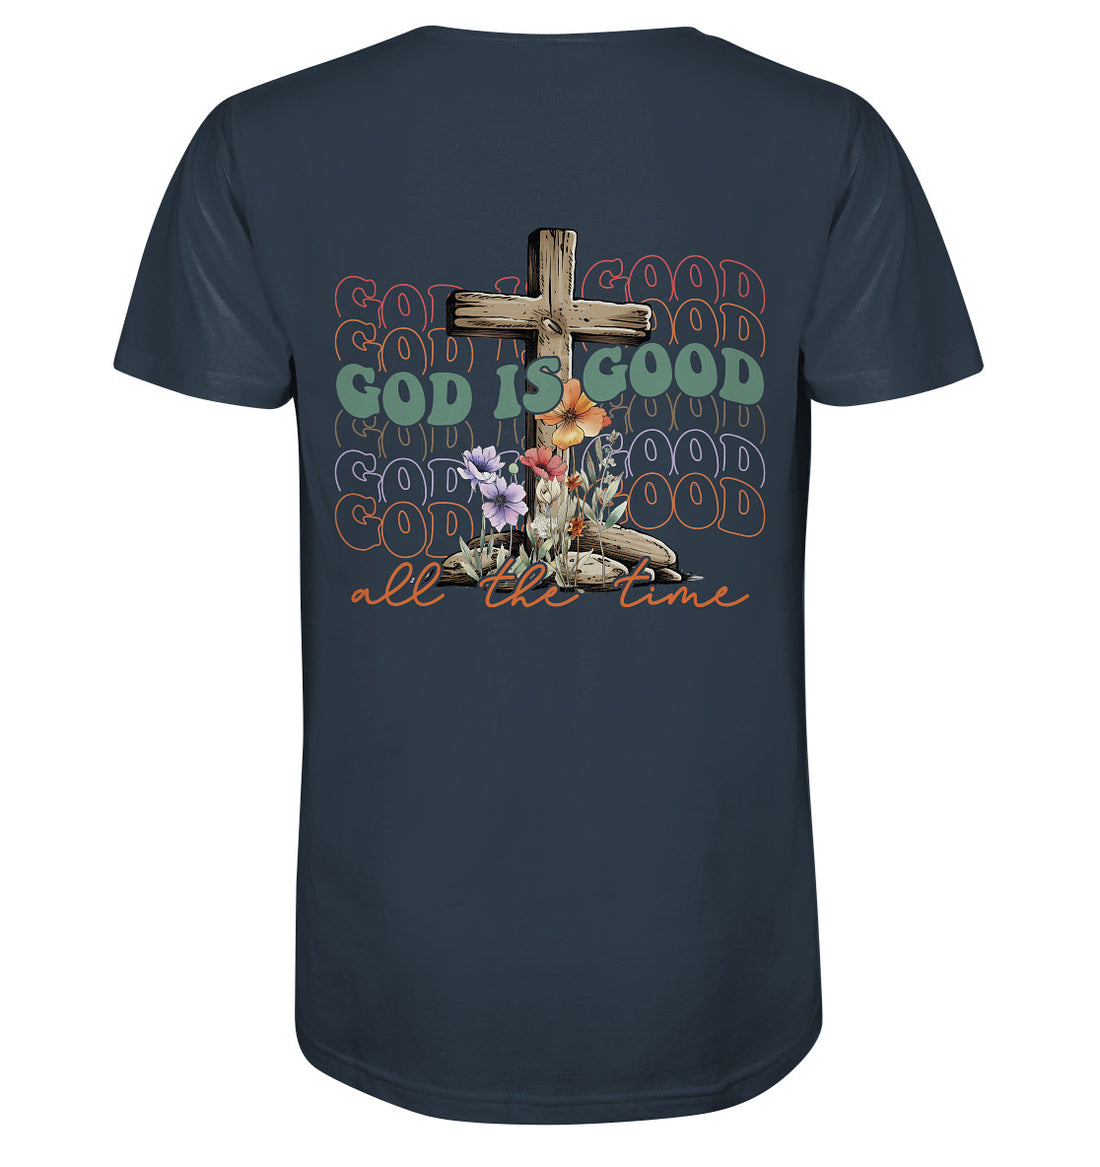 GOD IS GOOD - Organic Shirt